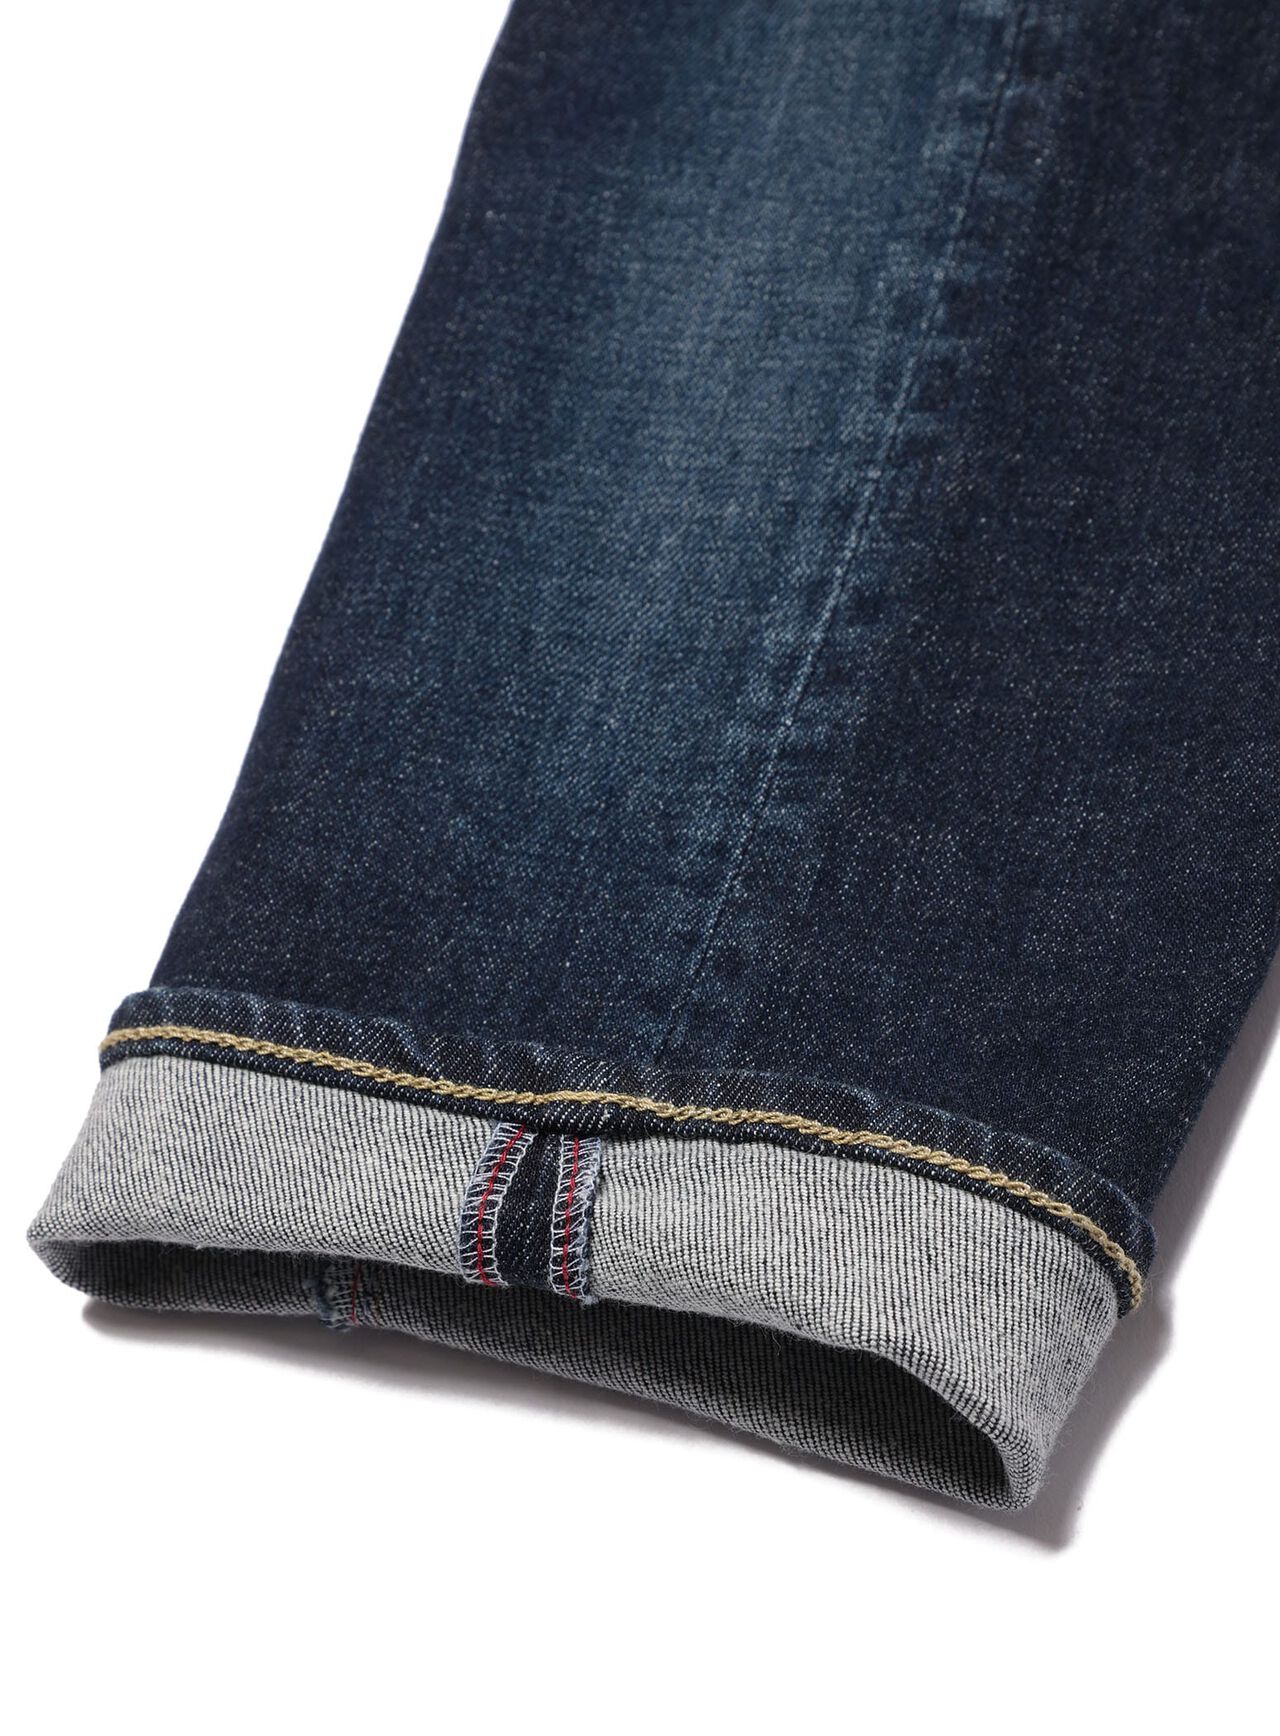 Jeans - slim 22-U2 2 years,L, large image number 9